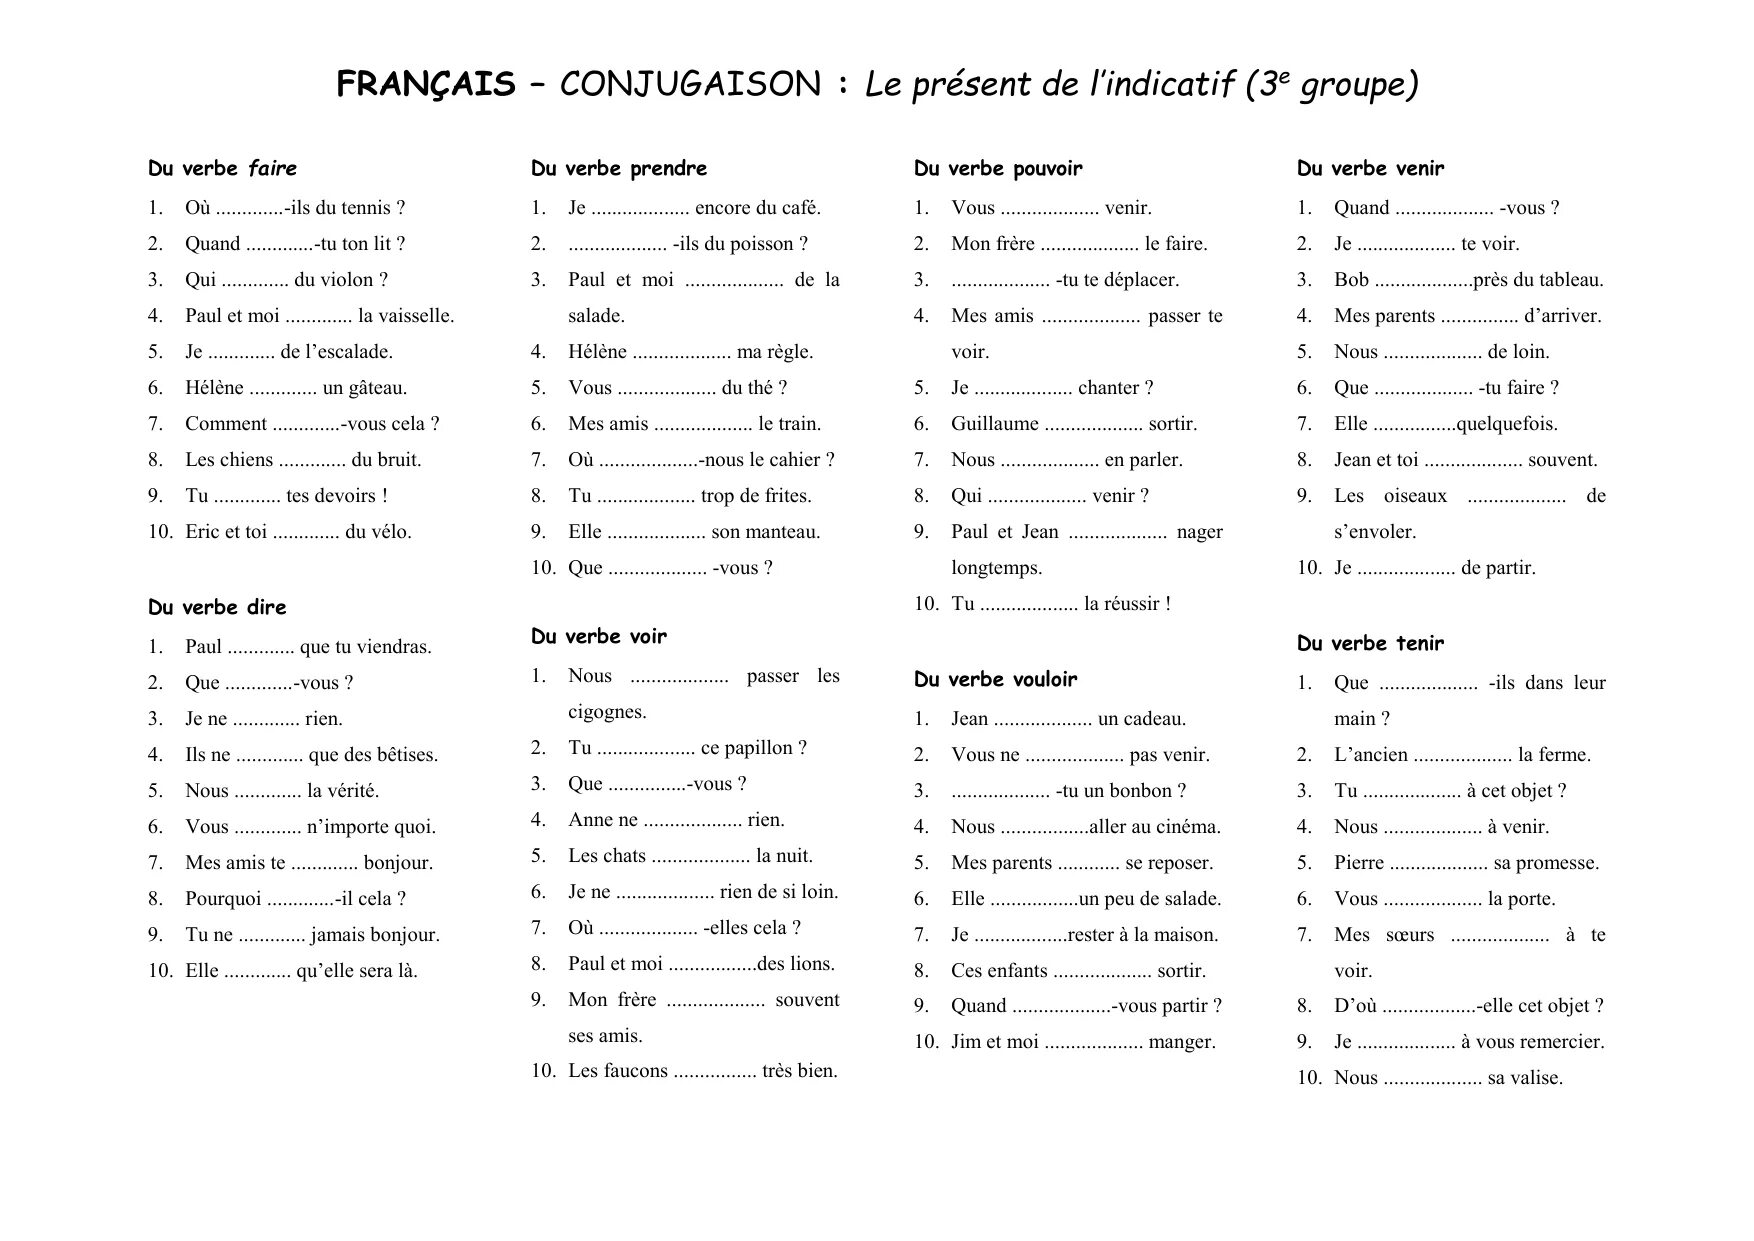 Present de l'indicatif во французском языке exercises. Present de l'indicatif во французском языке. Present французский упражнения. Present во французском языке упражнения. Глаголы 1 группы задания